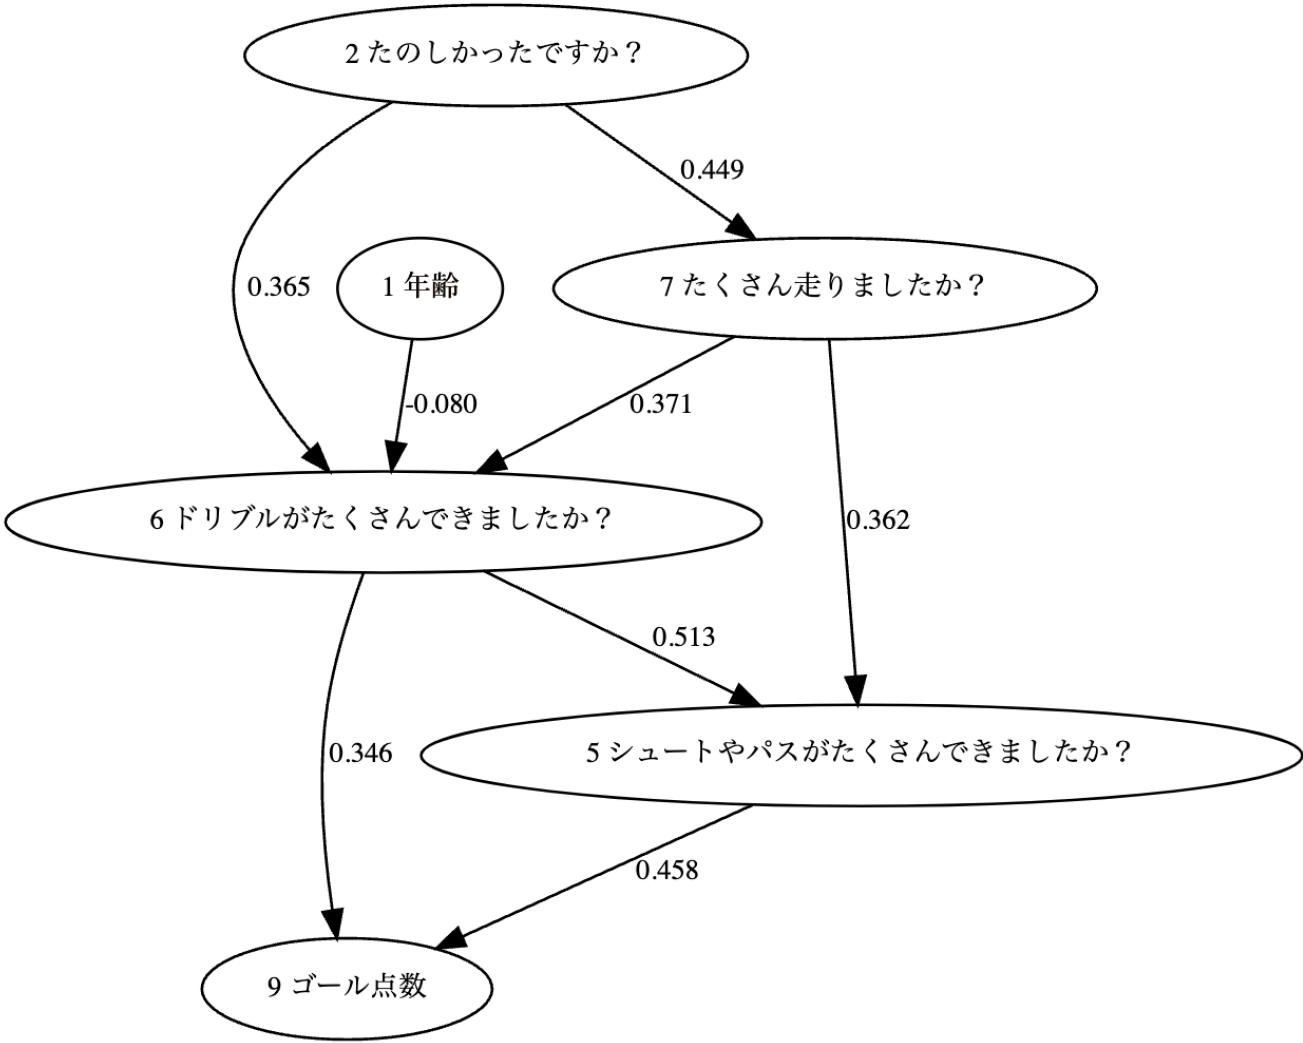 DirectLiNGAMから得られた遷移行列に基づく因果グラフDAG1　DAG1 for adjacency matrix obtained from DirectLiNGAM.